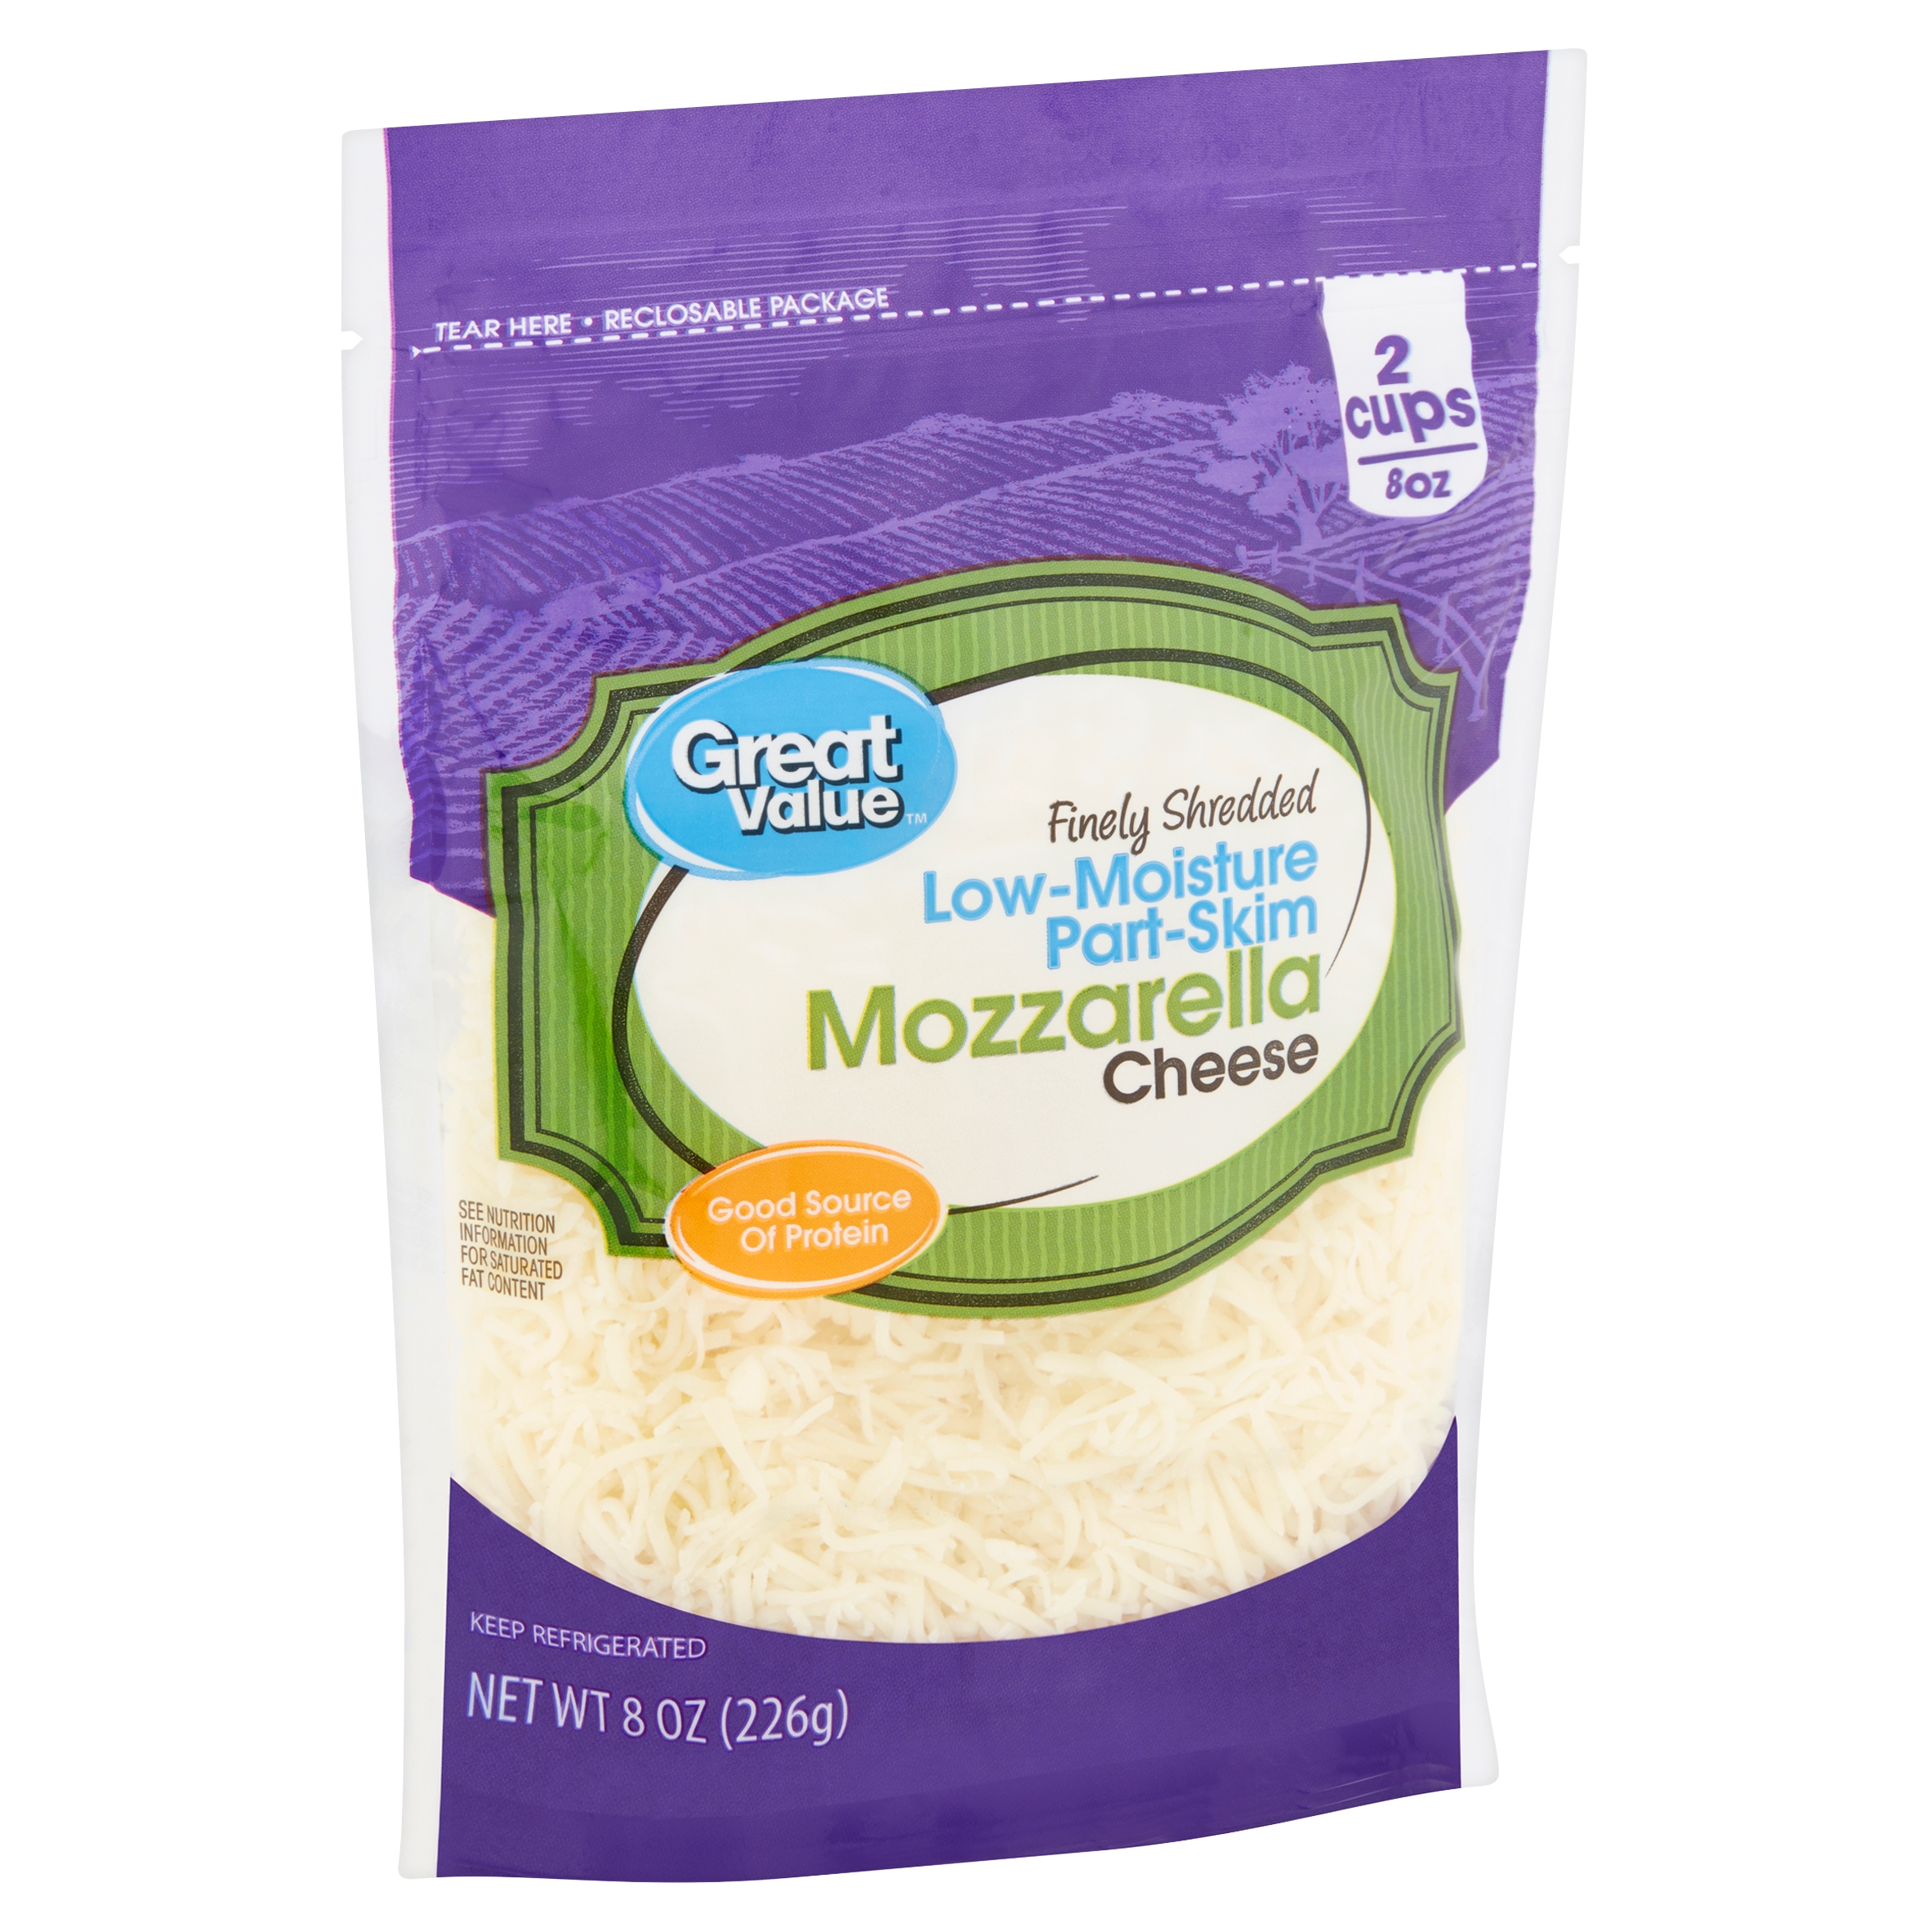 Great Value Finely Shredded Low-Moisture Part-Skim Mozzarella Cheese, 8 Oz Image